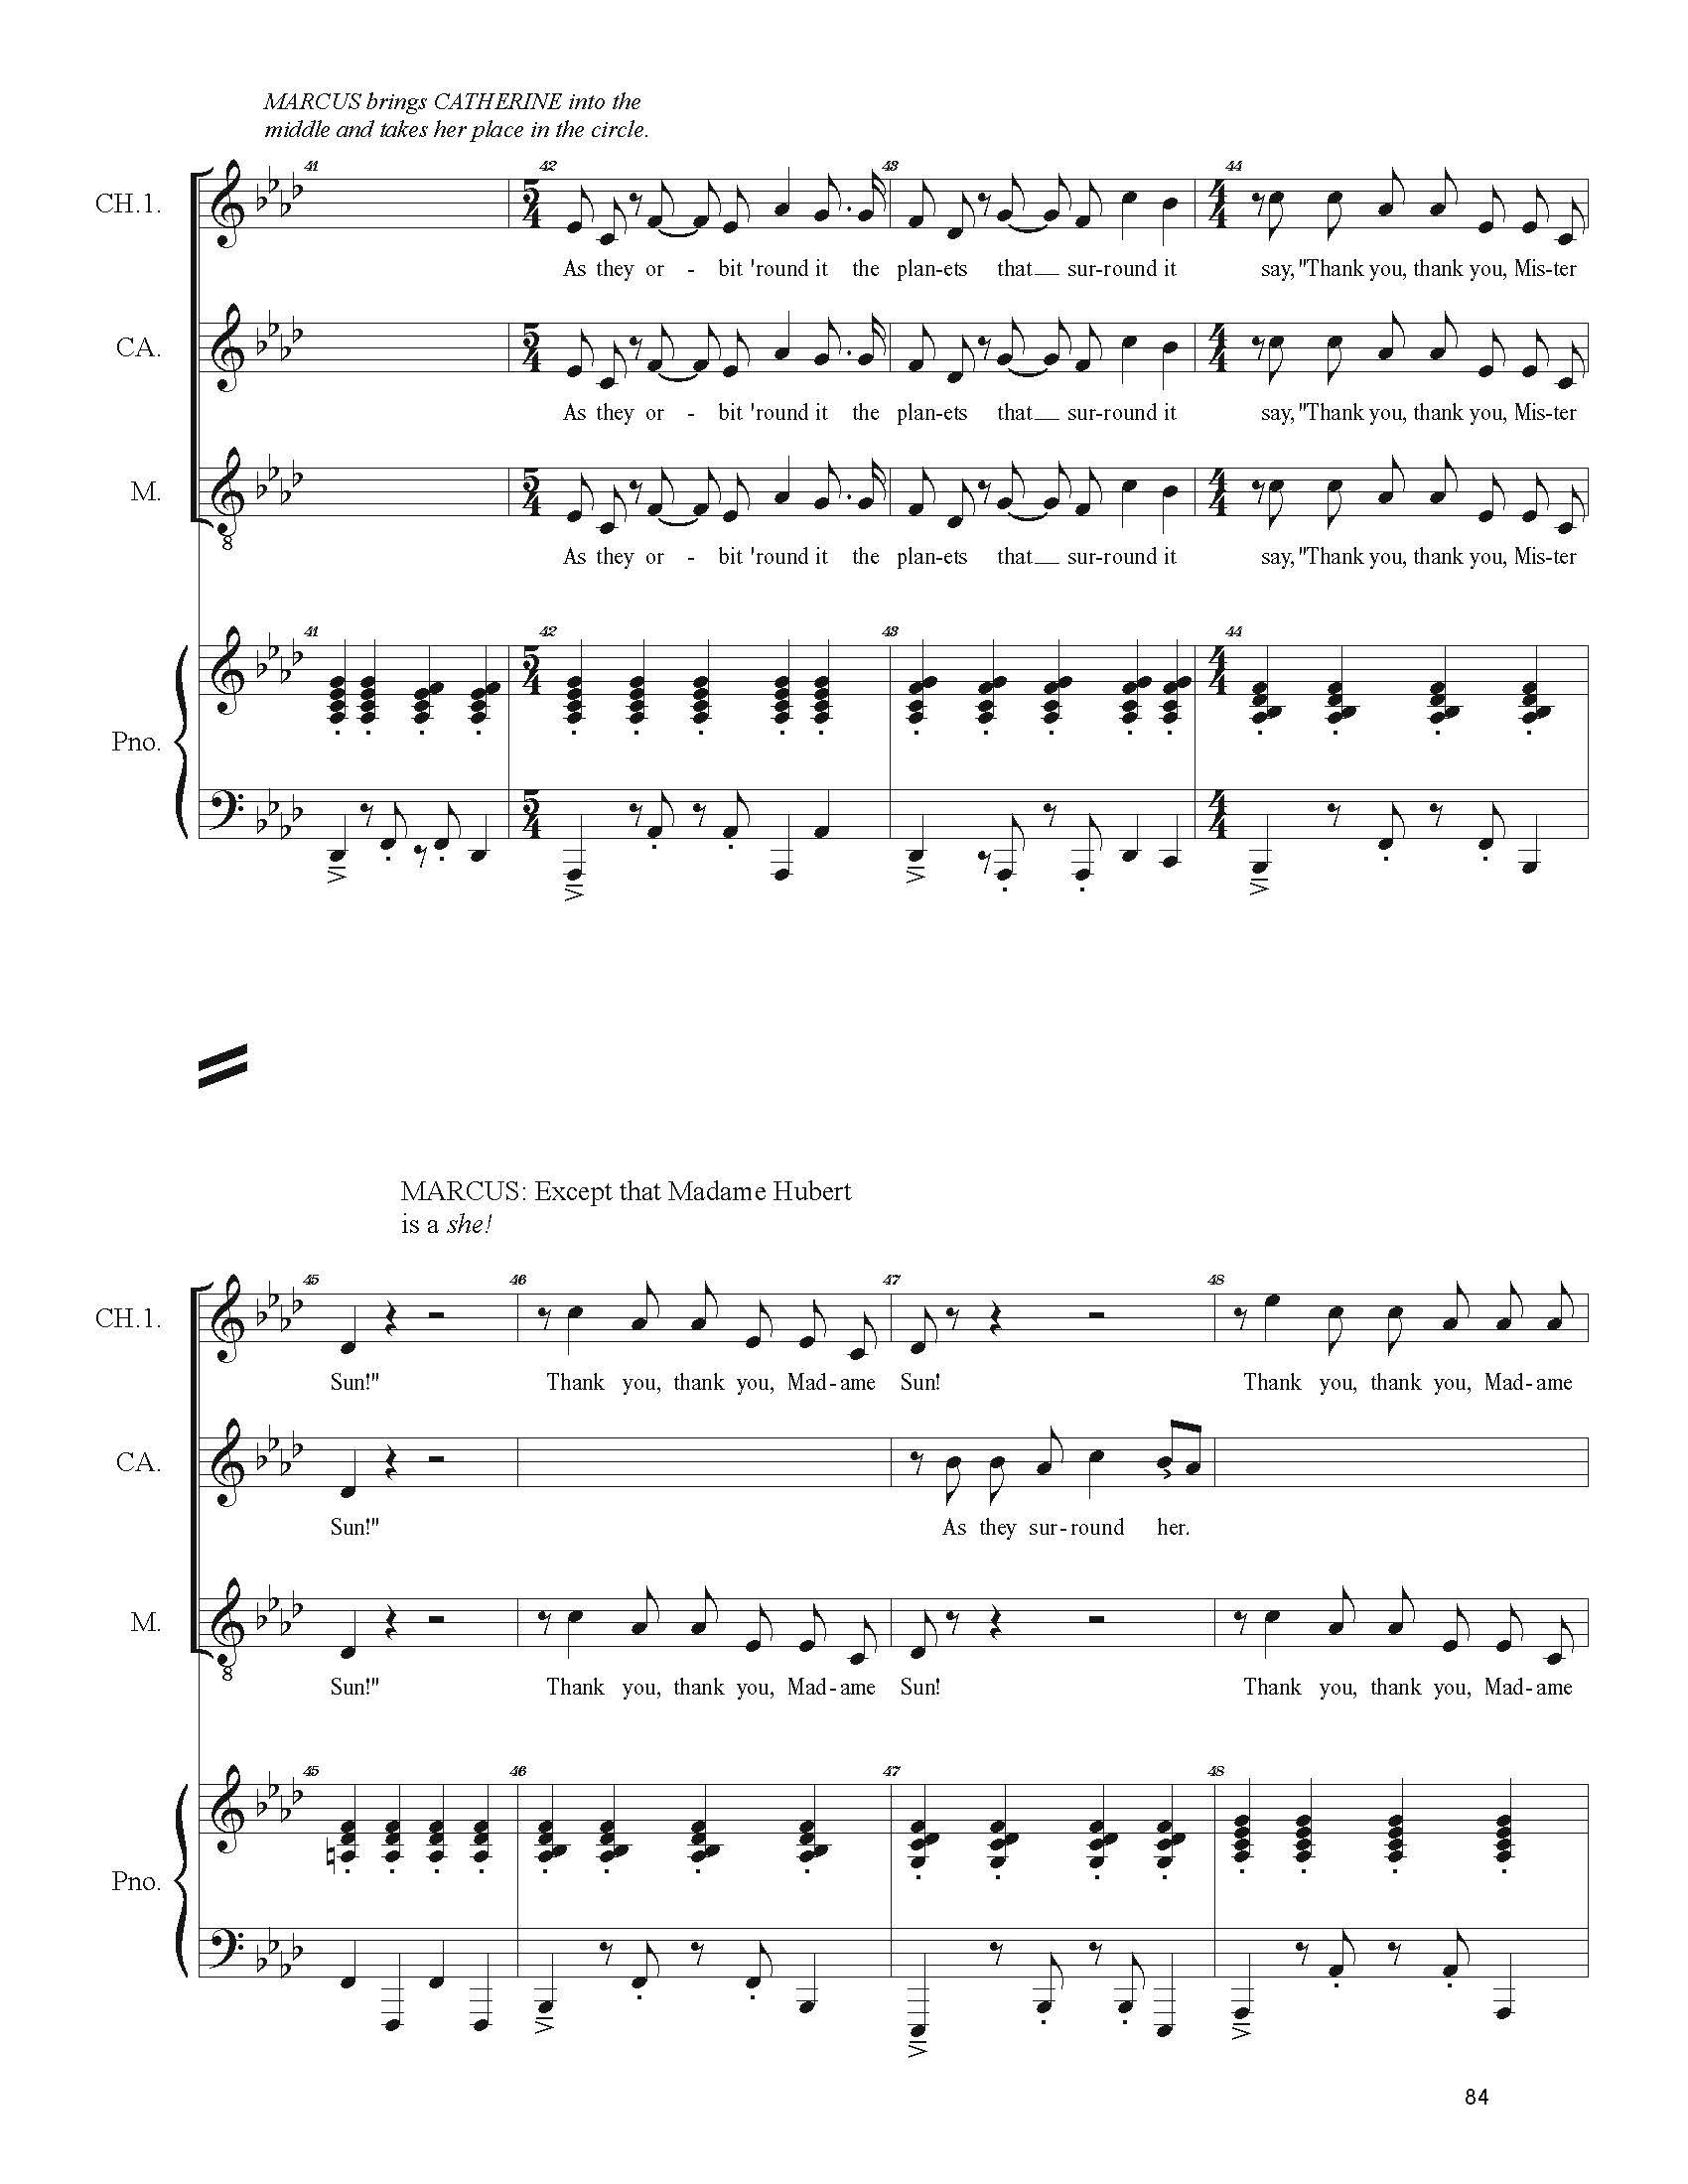 FULL PIANO VOCAL SCORE DRAFT 1 - Score_Page_084.jpg